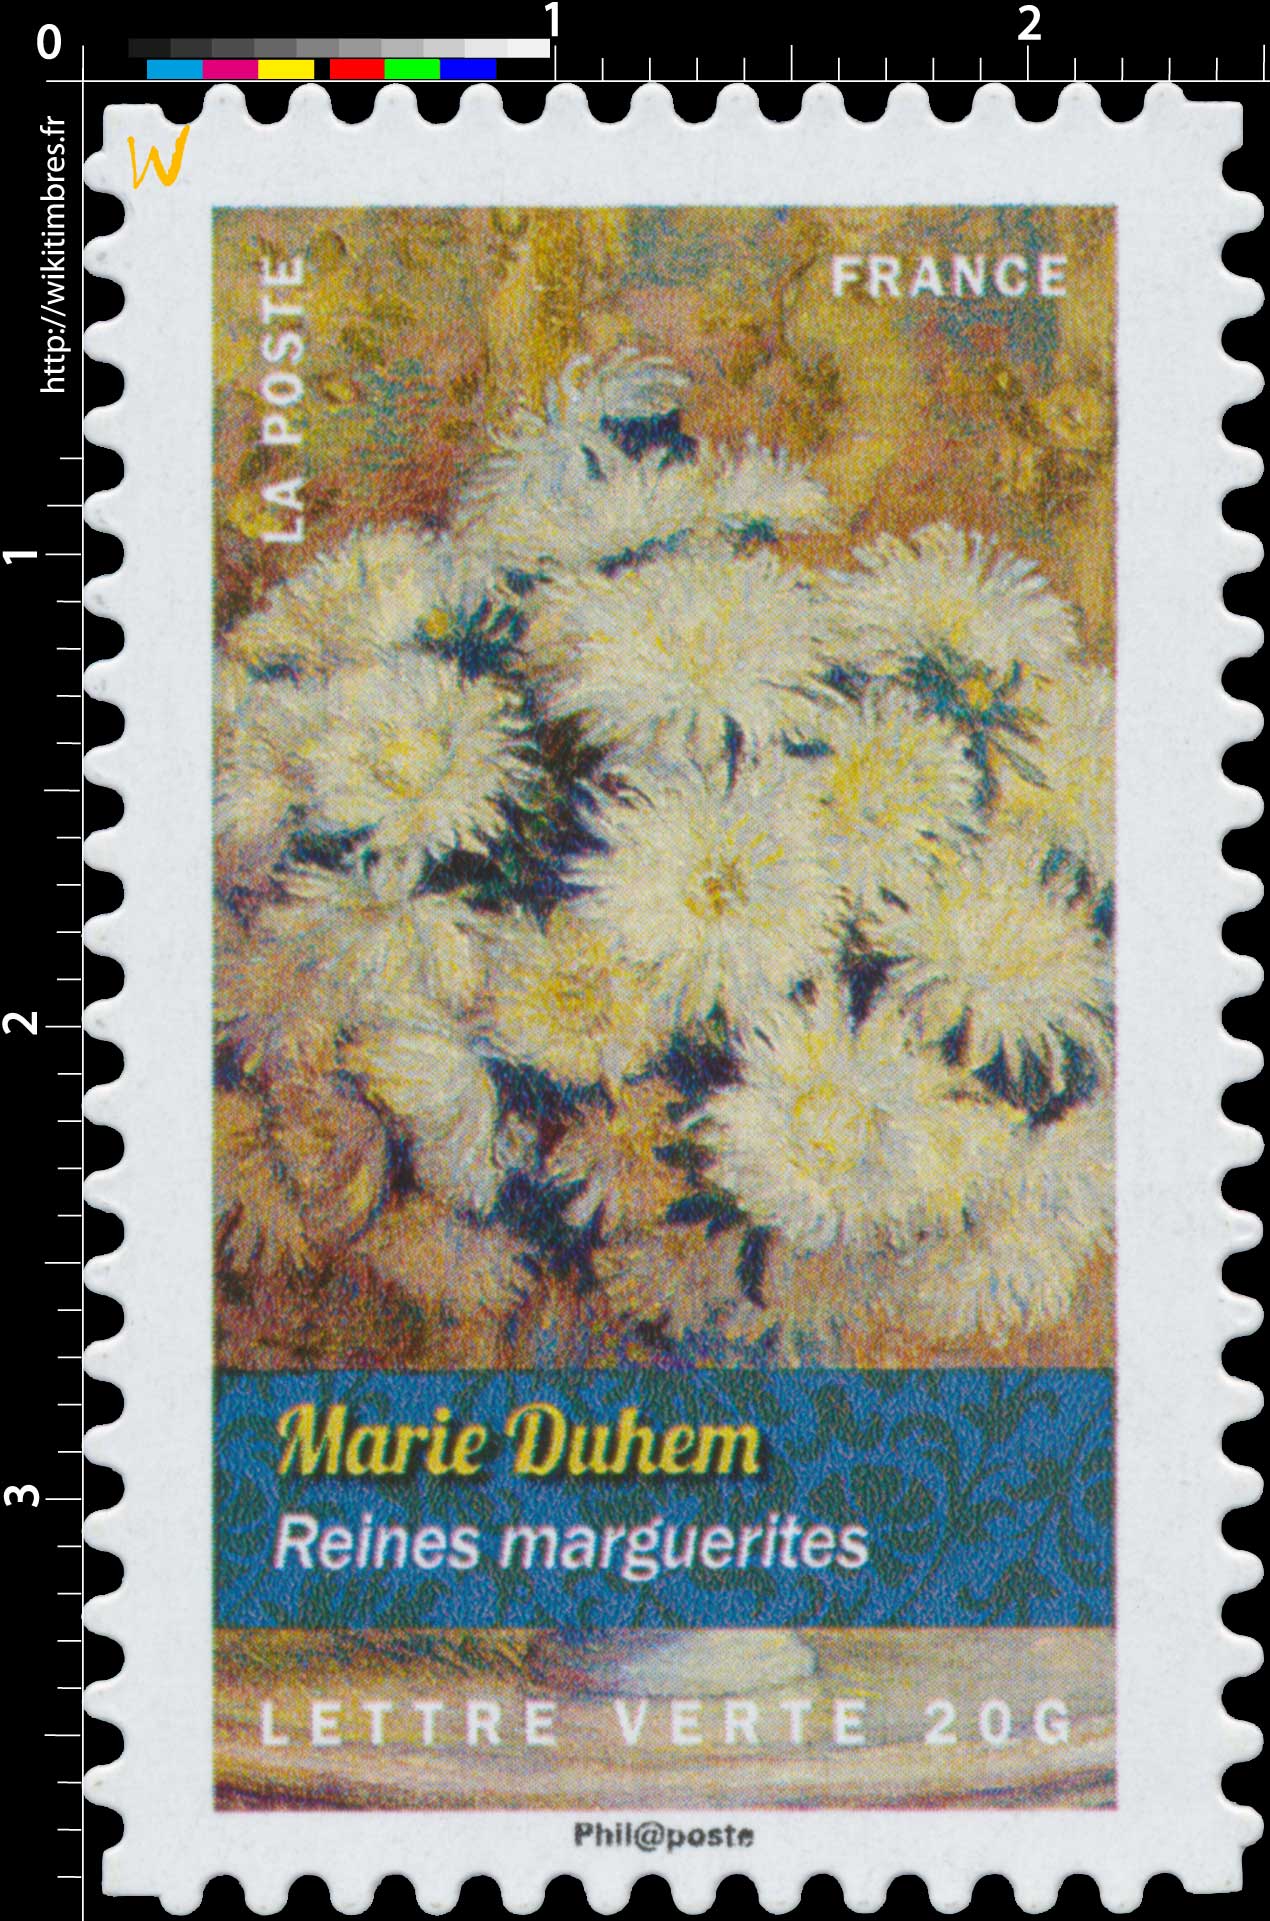 2015 Marie Duhem - Reines marguerites